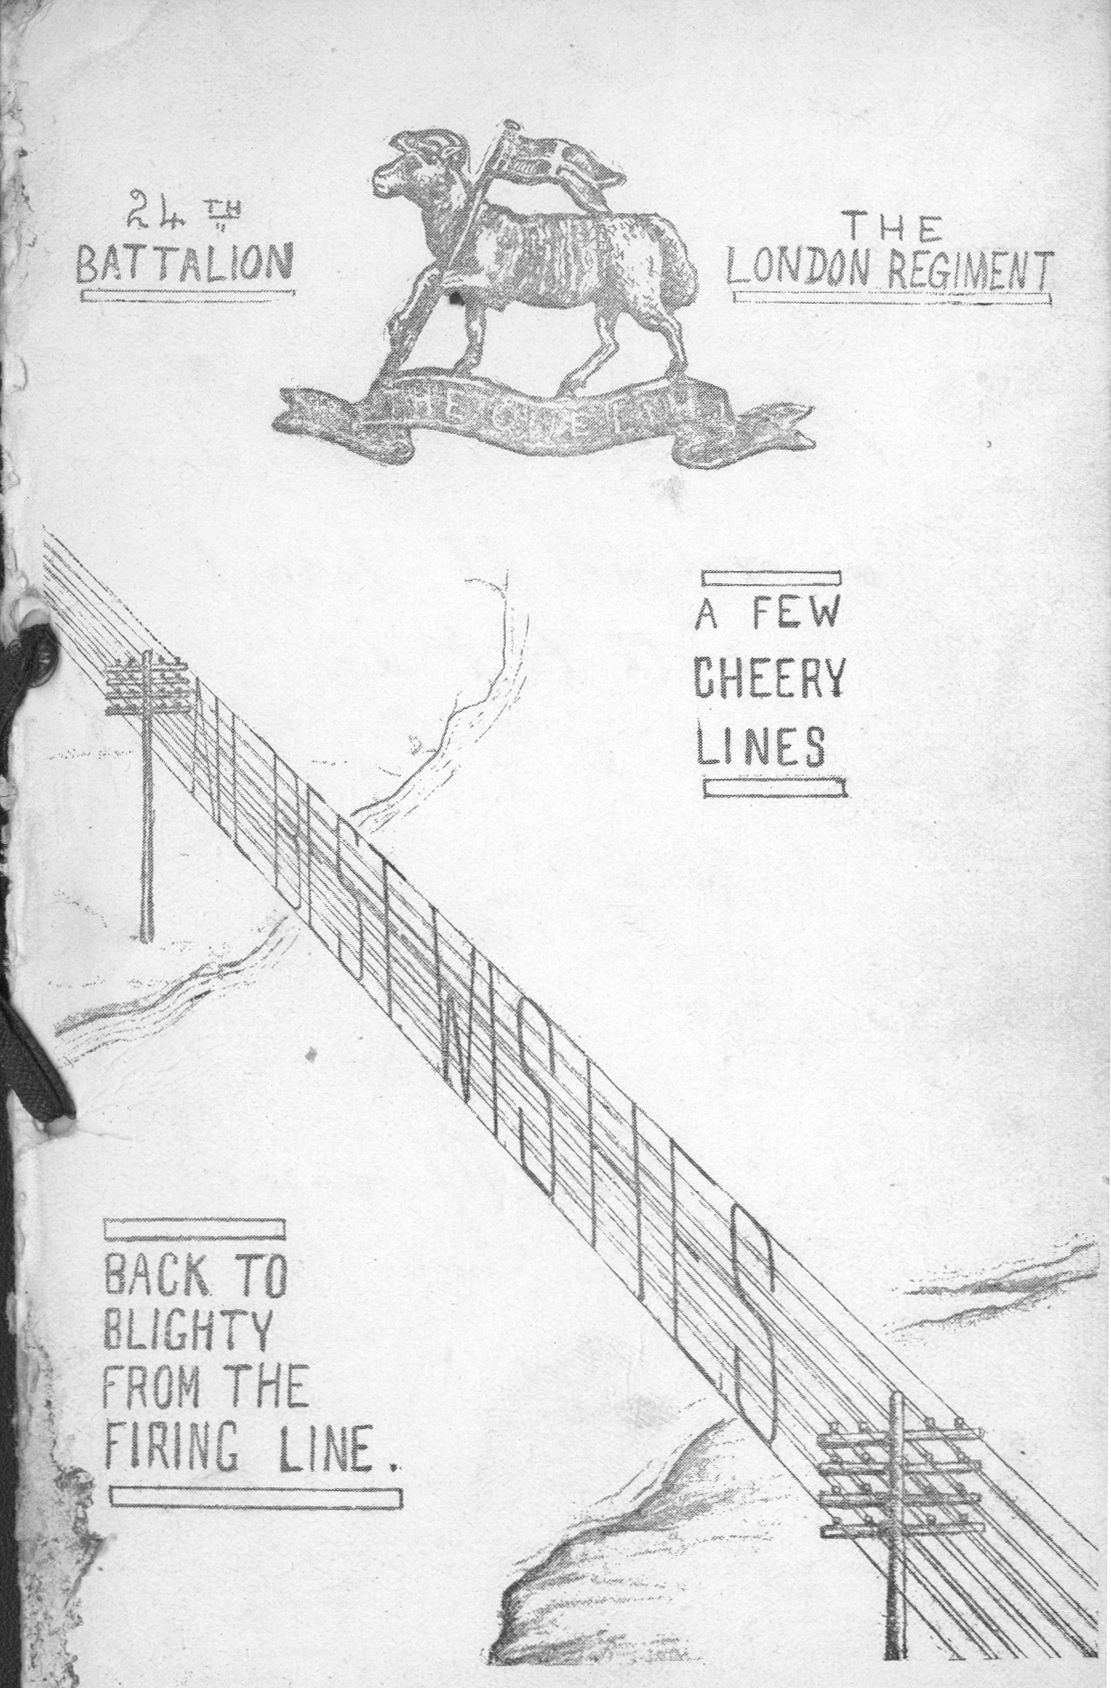 Christmas card 24th Batt. Lon. Regt. 1914